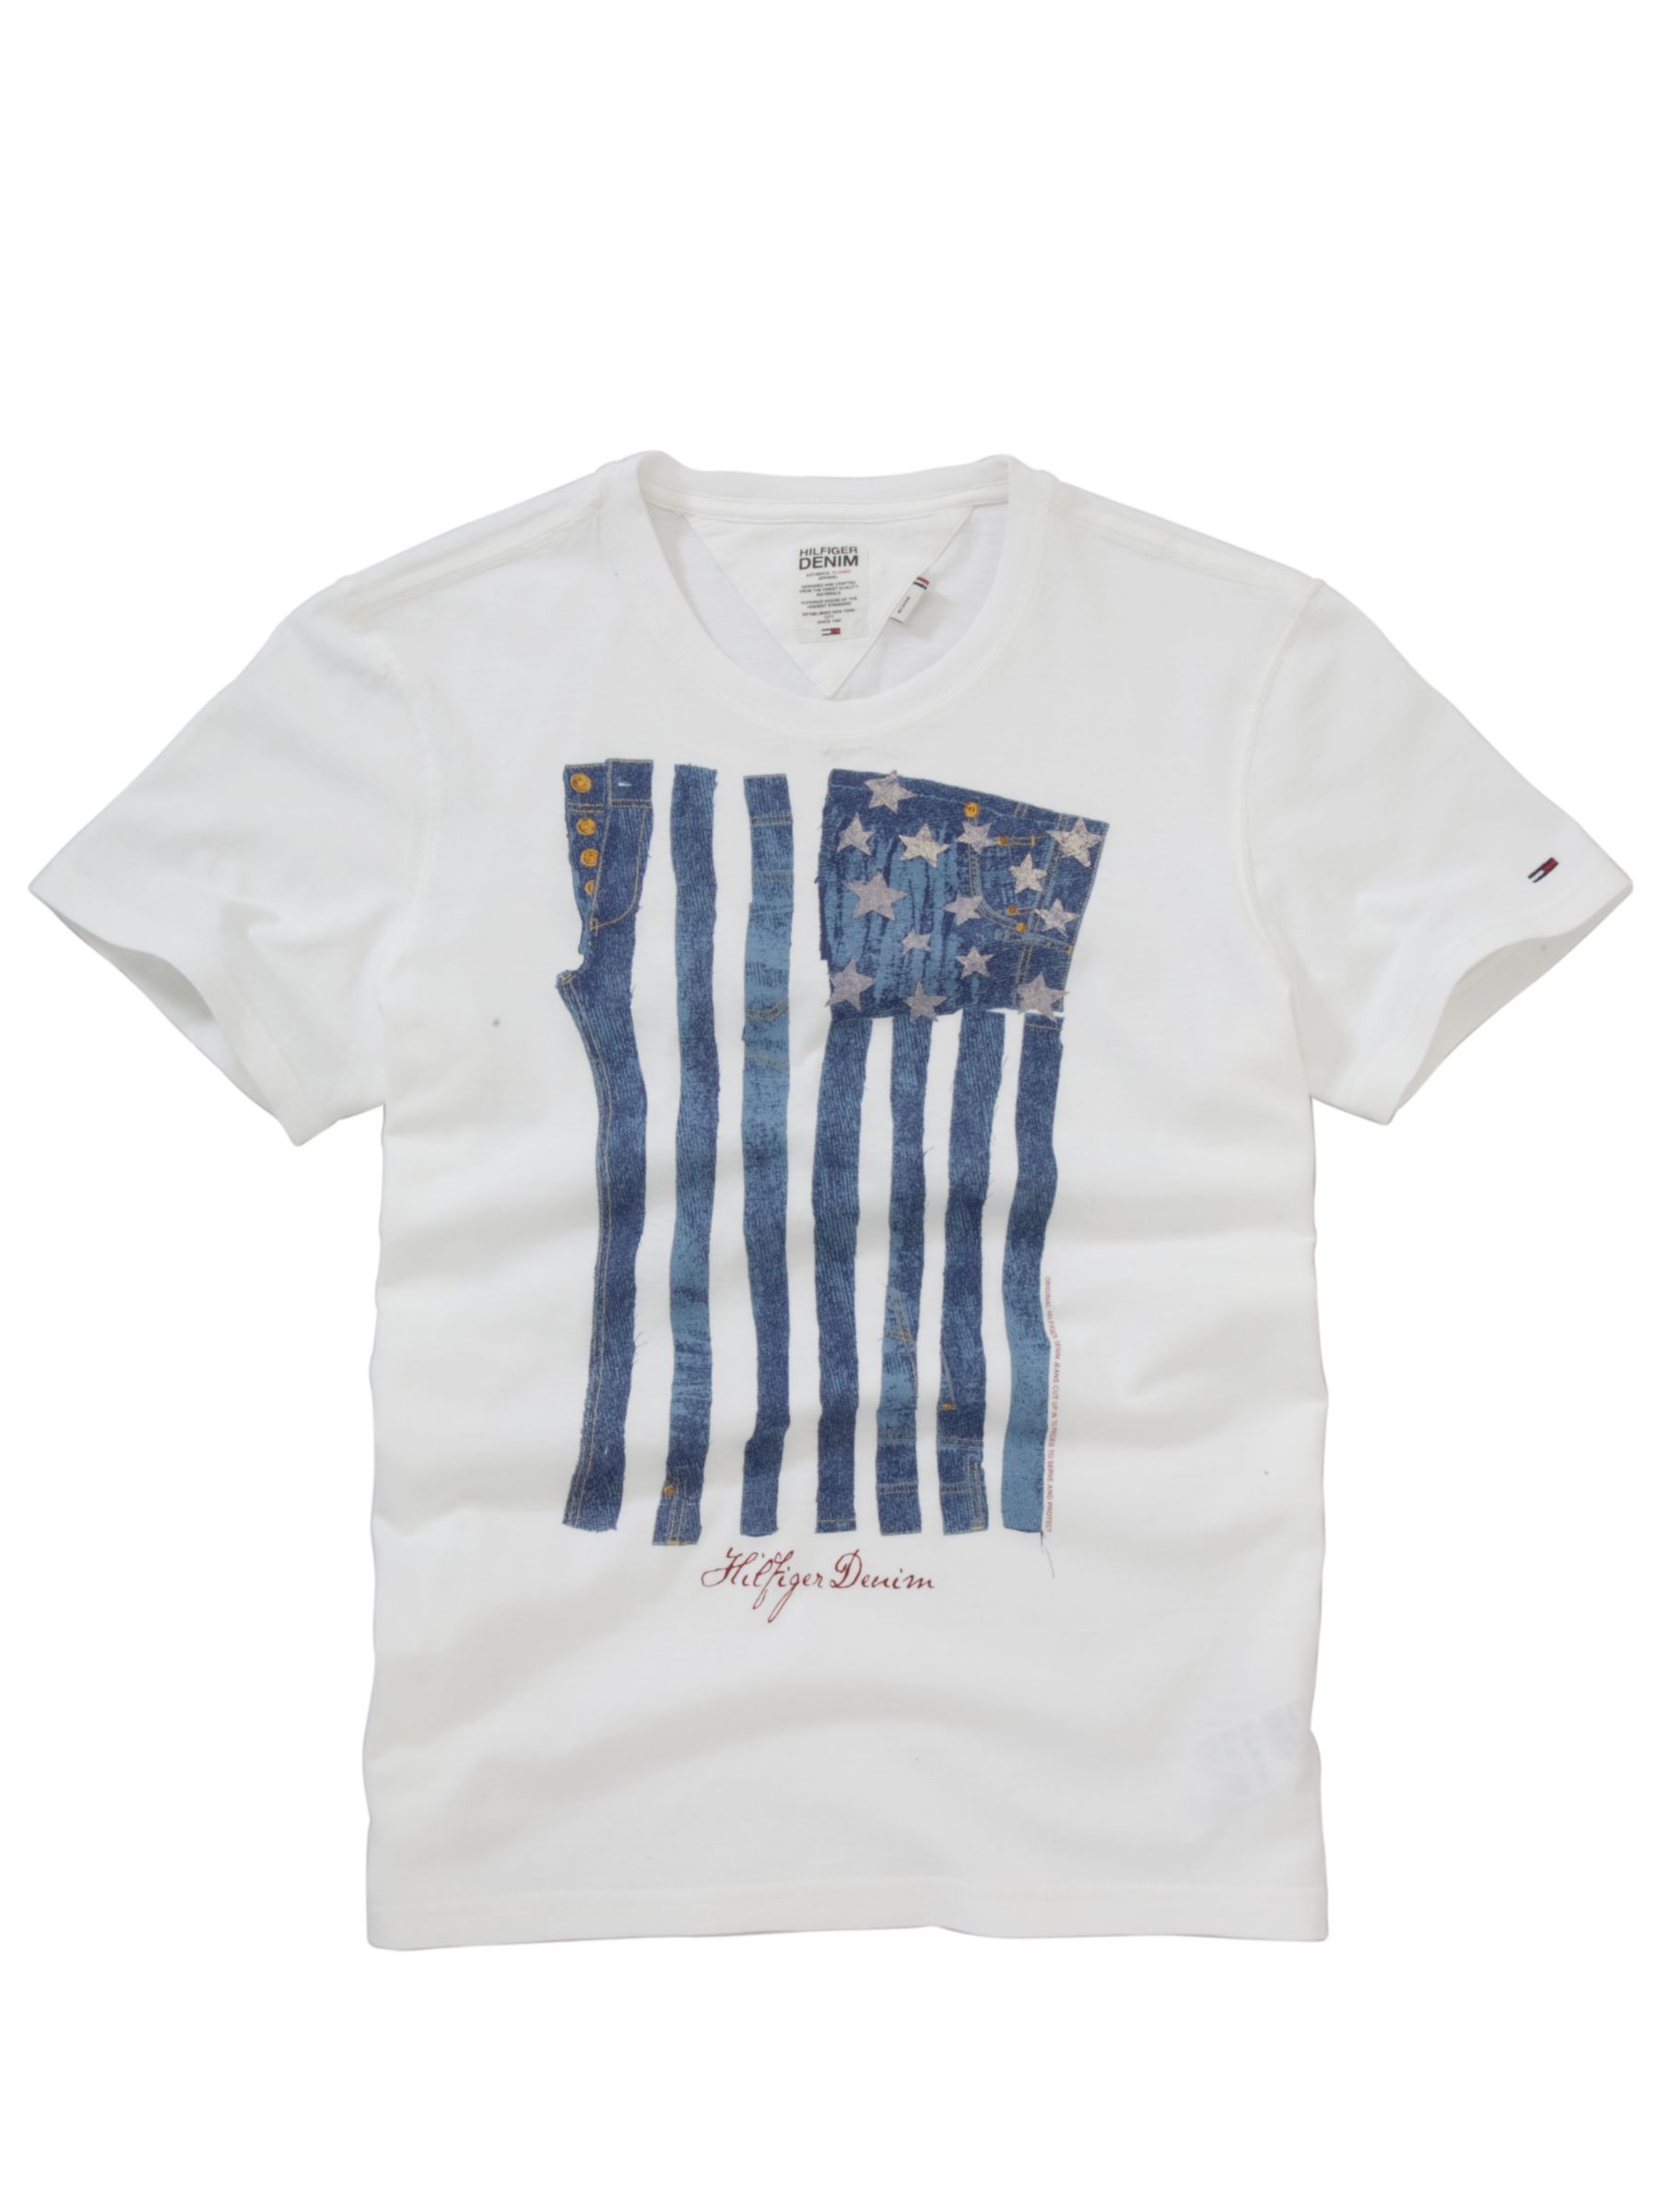 Hilfiger Denim Frank Flag T-Shirt, White